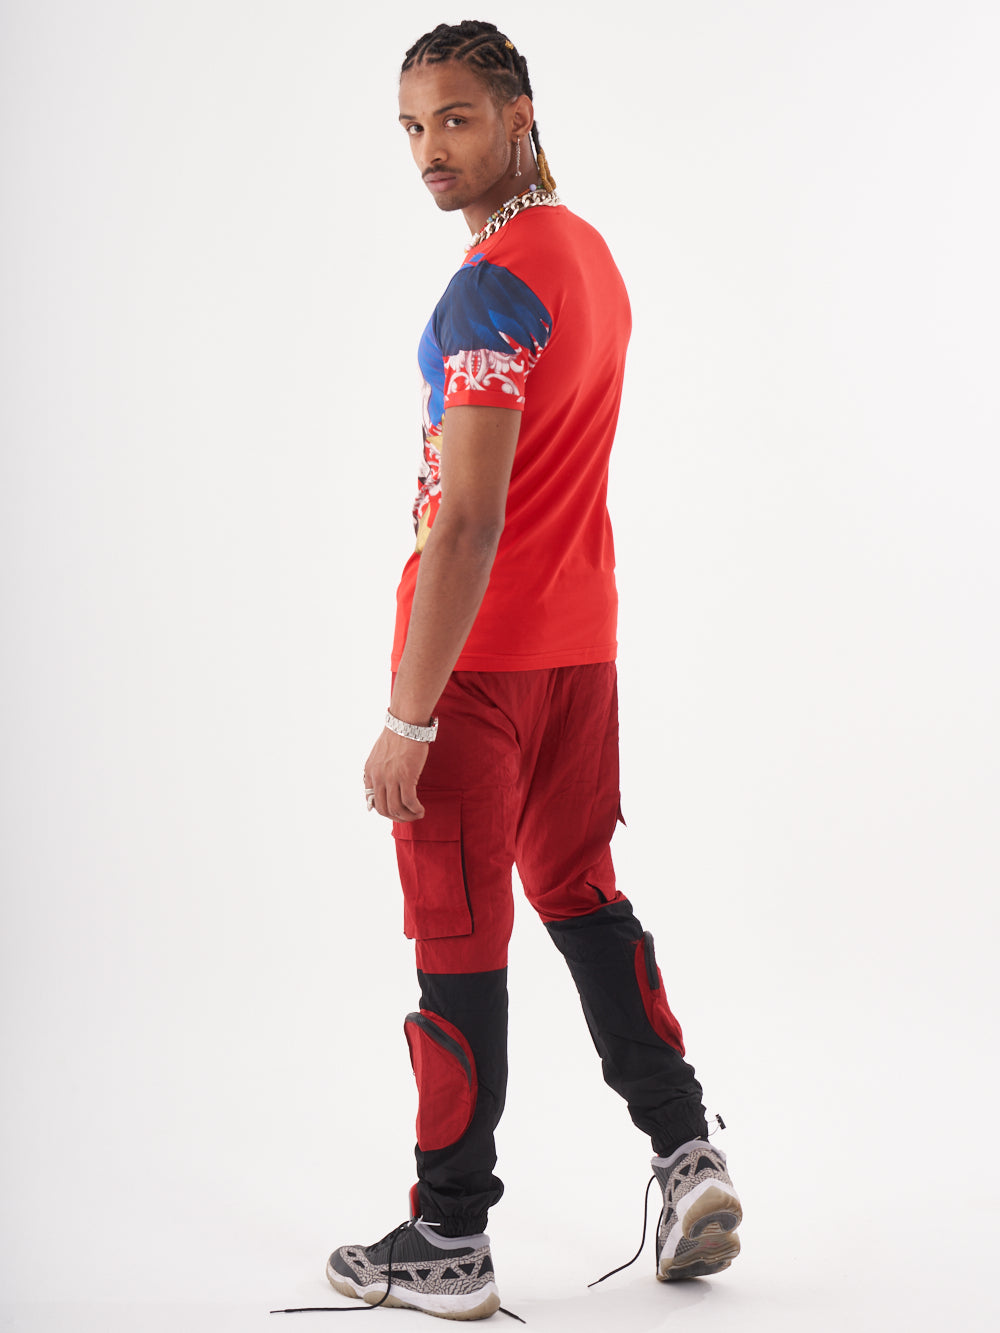 A man wearing the EUPHORIA T-SHIRT | RED.